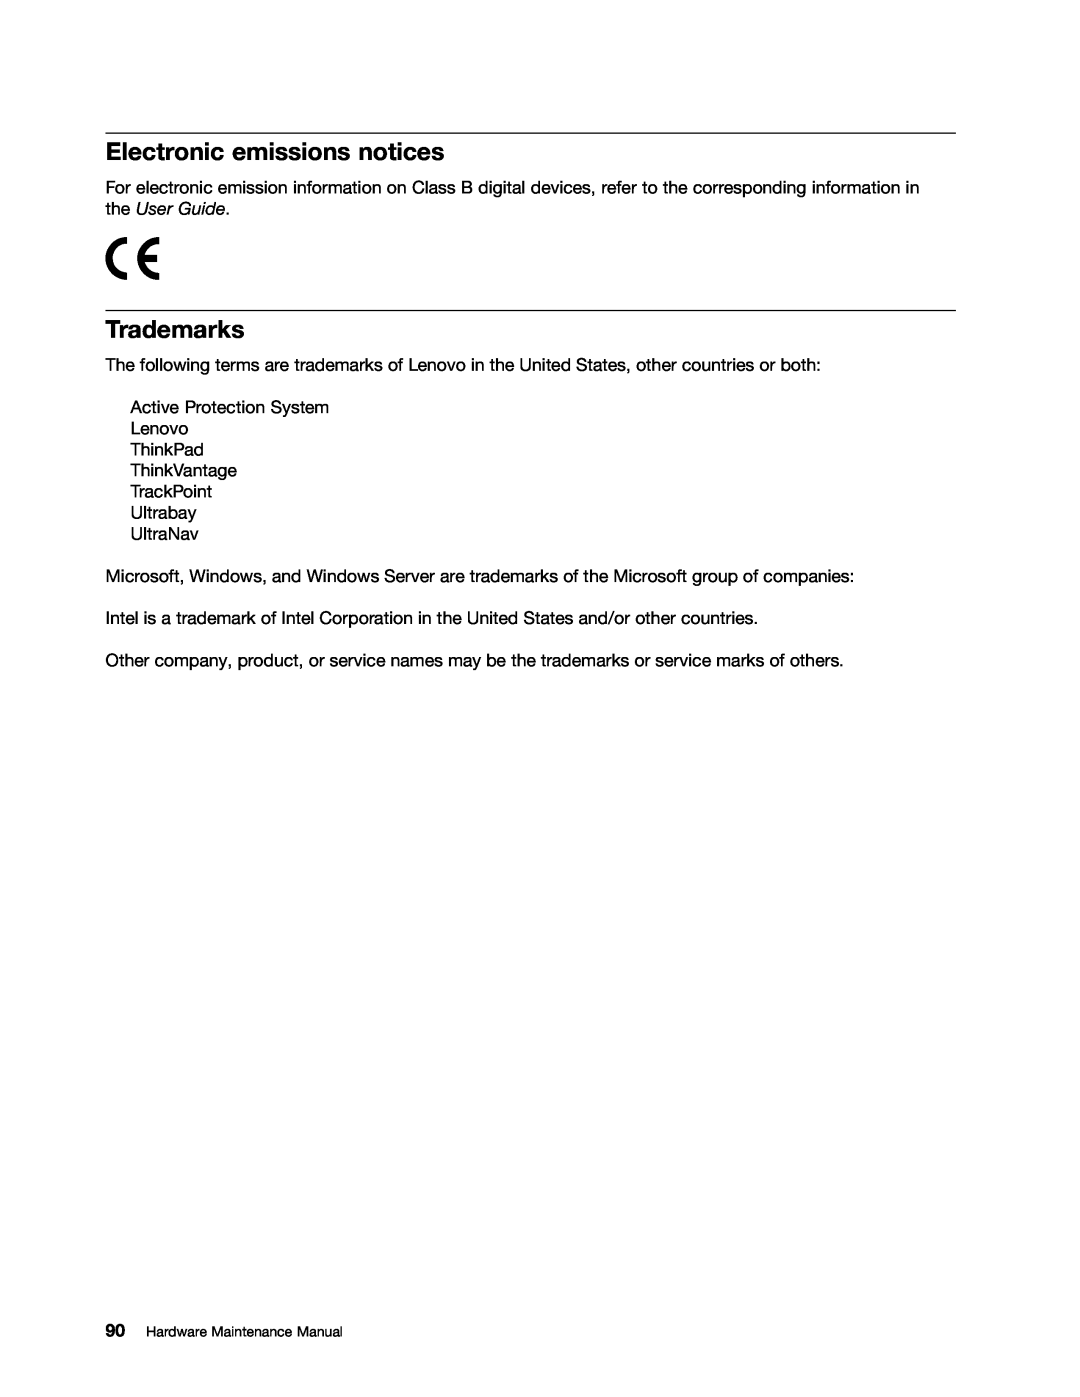 Lenovo S230U, 33472YU manual Electronic emissions notices, Trademarks 